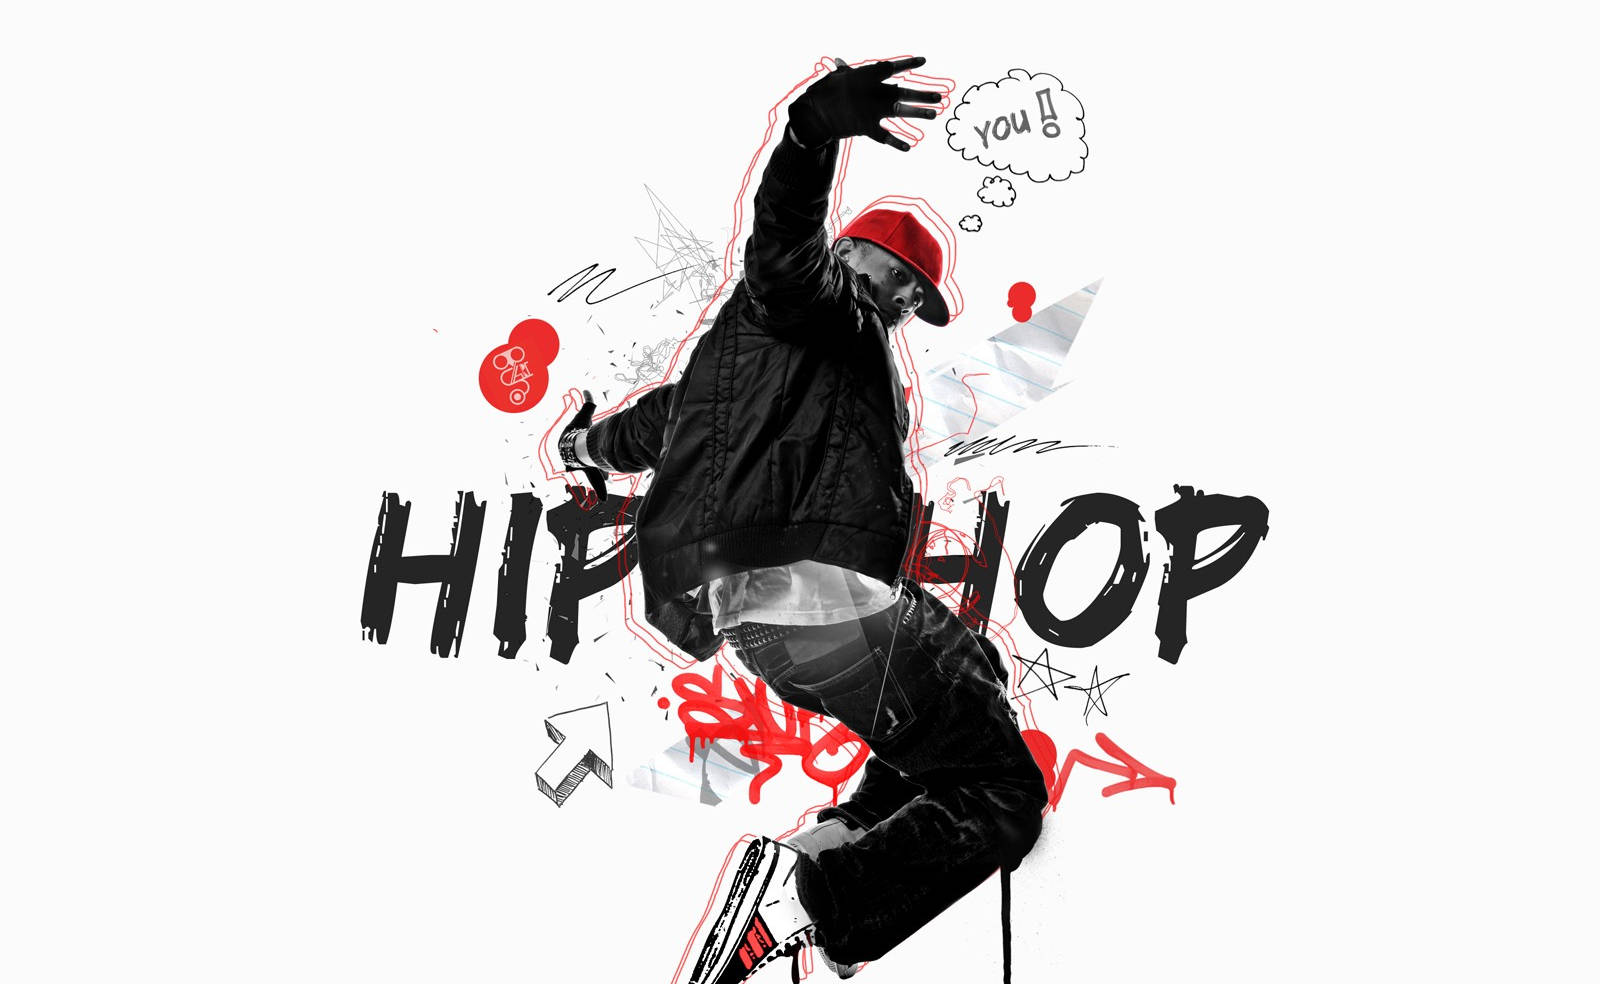 30200 Hip Hop Dance Stock Photos Pictures  RoyaltyFree Images  iStock   Dance class Hip hop dancers Hip hop dance class